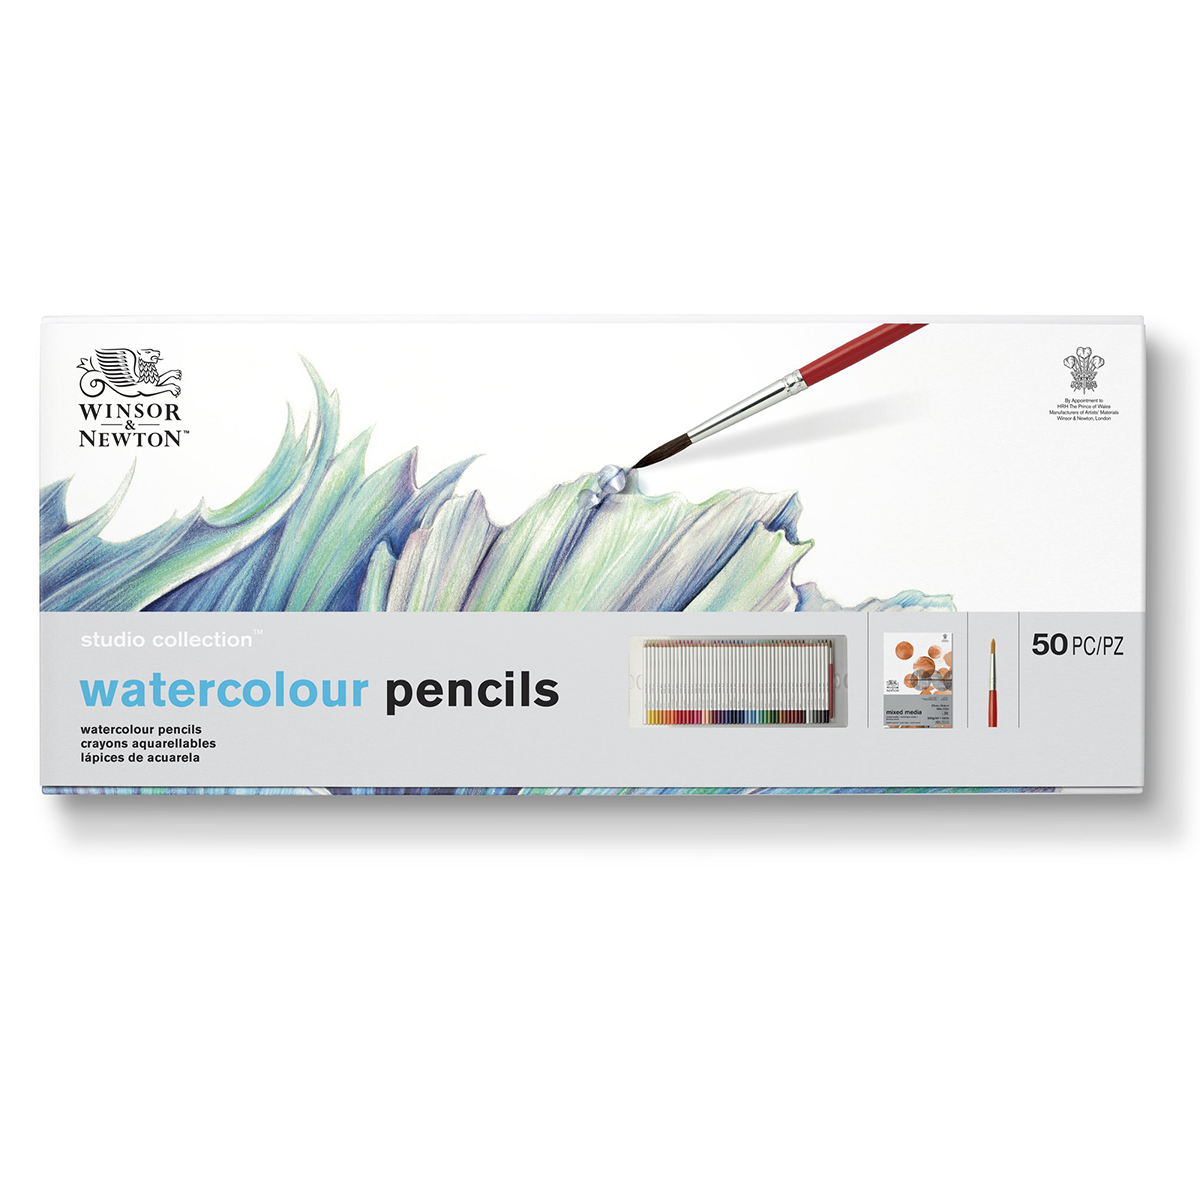 Winsor & Newton Studio Collection Watercolour Pencils Box Set of 50